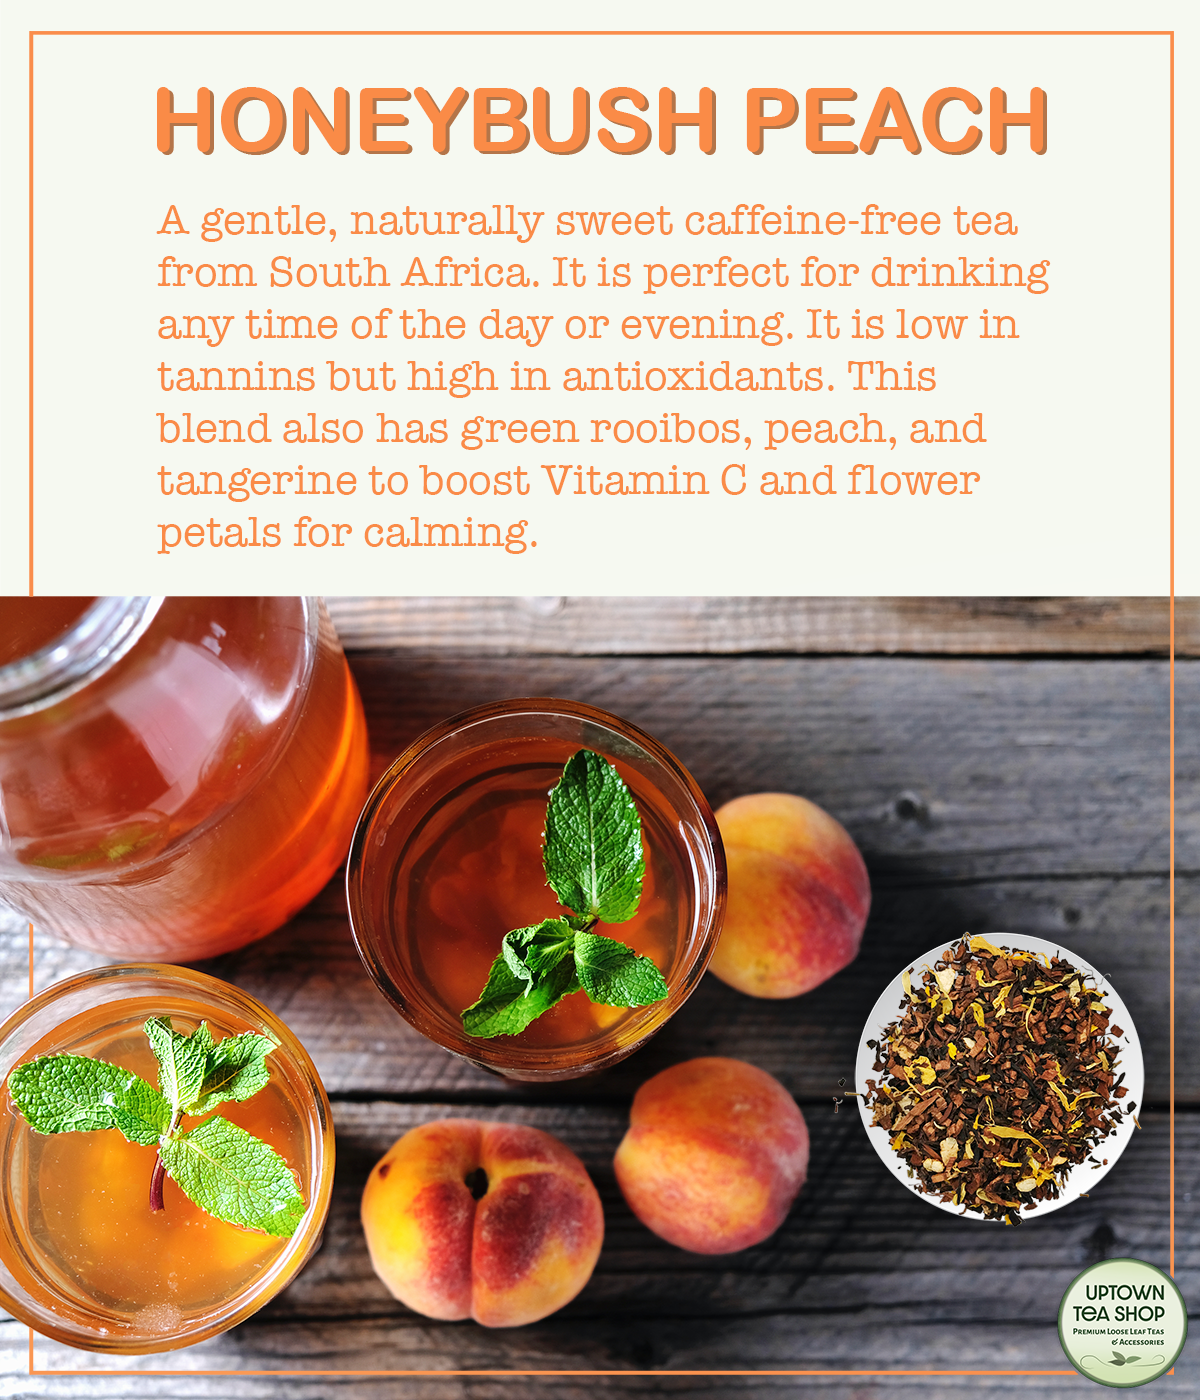 Uptown Tea Shop - Premium Loose Leaf Teas and Accessories | Honeybush Peach Herbal Tea